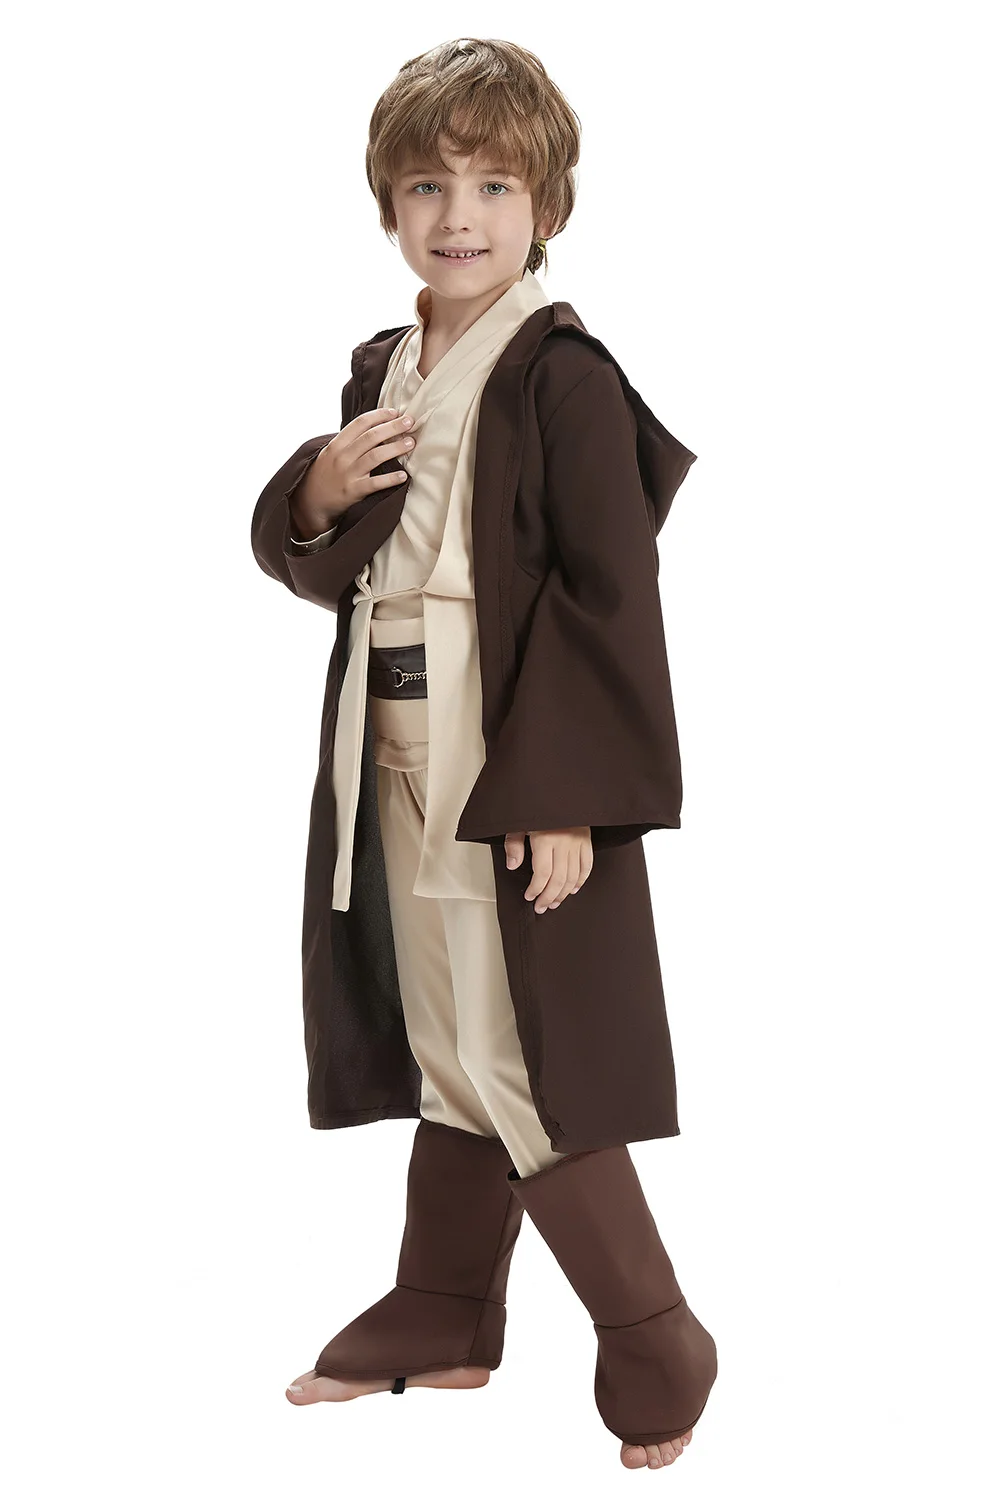 

Kid Children Jedi Knight Cosplay Costume Obi Wan Kenobi Uniform Suit Anakin Skywalker Hooded Robe Cloak Outfits